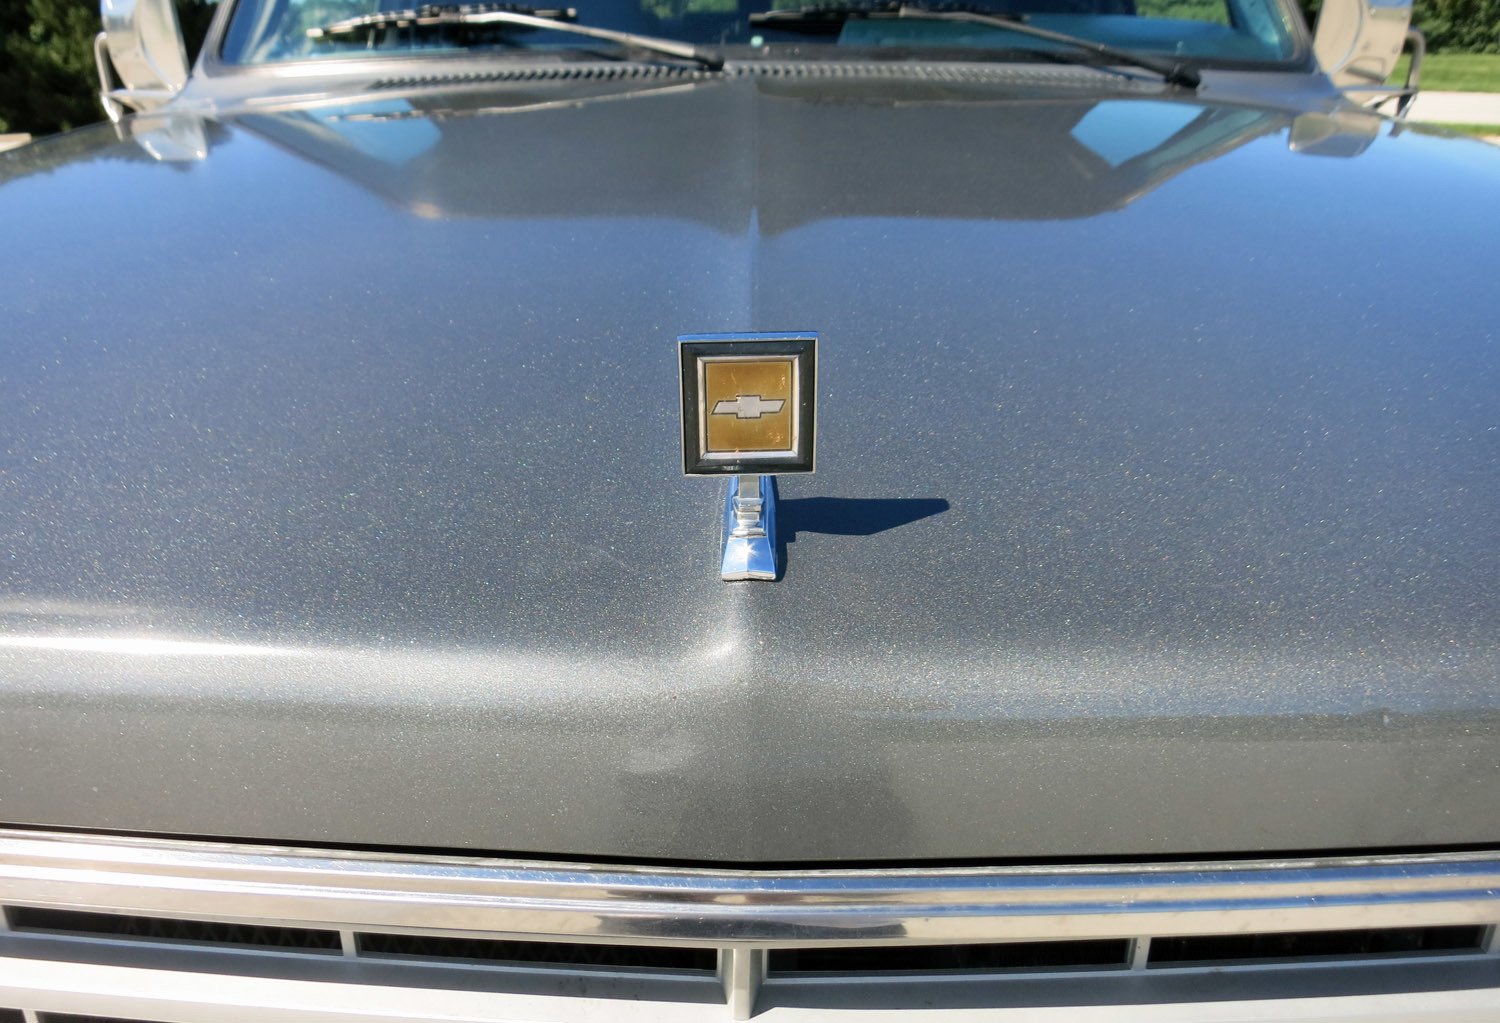 1987 Chevrolet Suburban